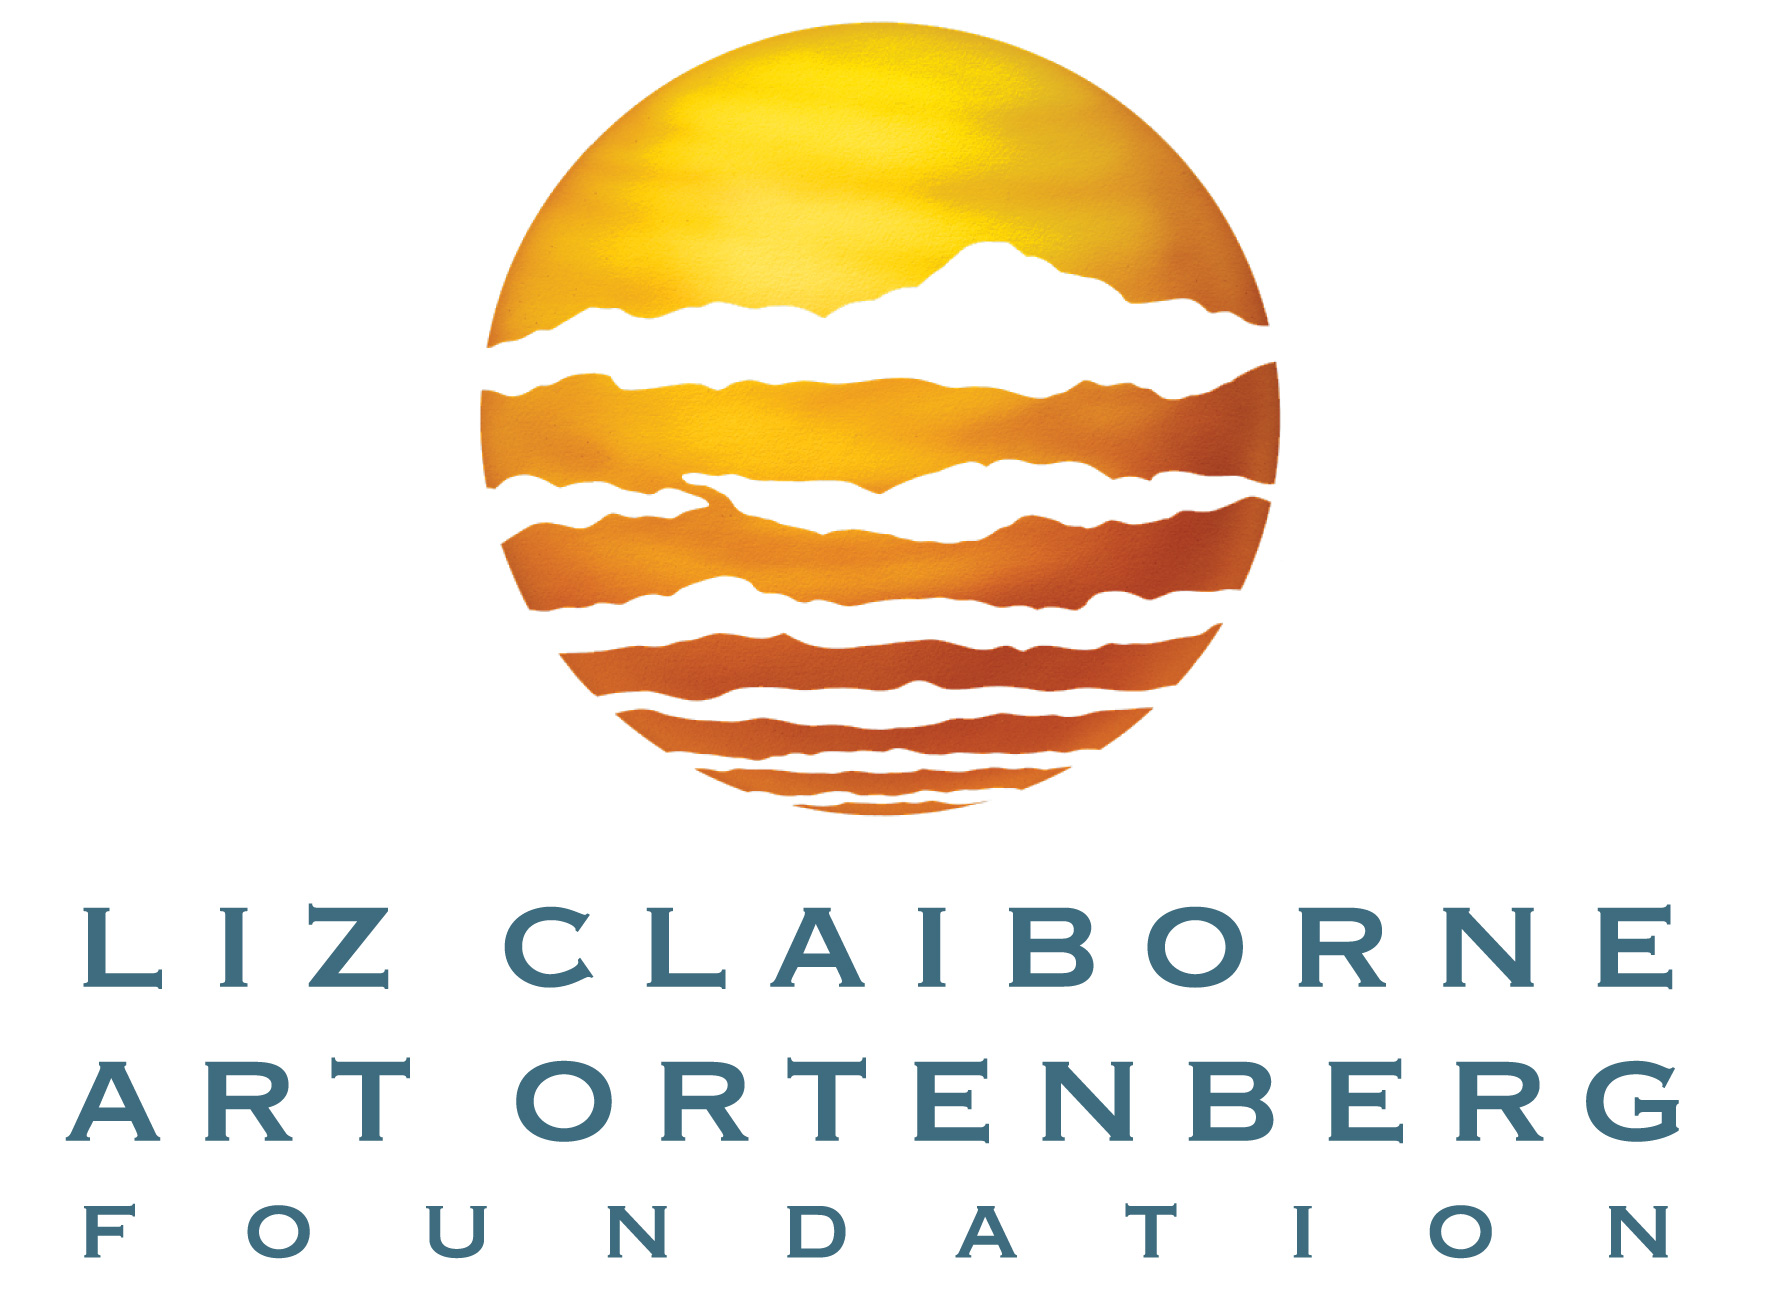 The Liz Claiborne & Art Ortenberg Foundation